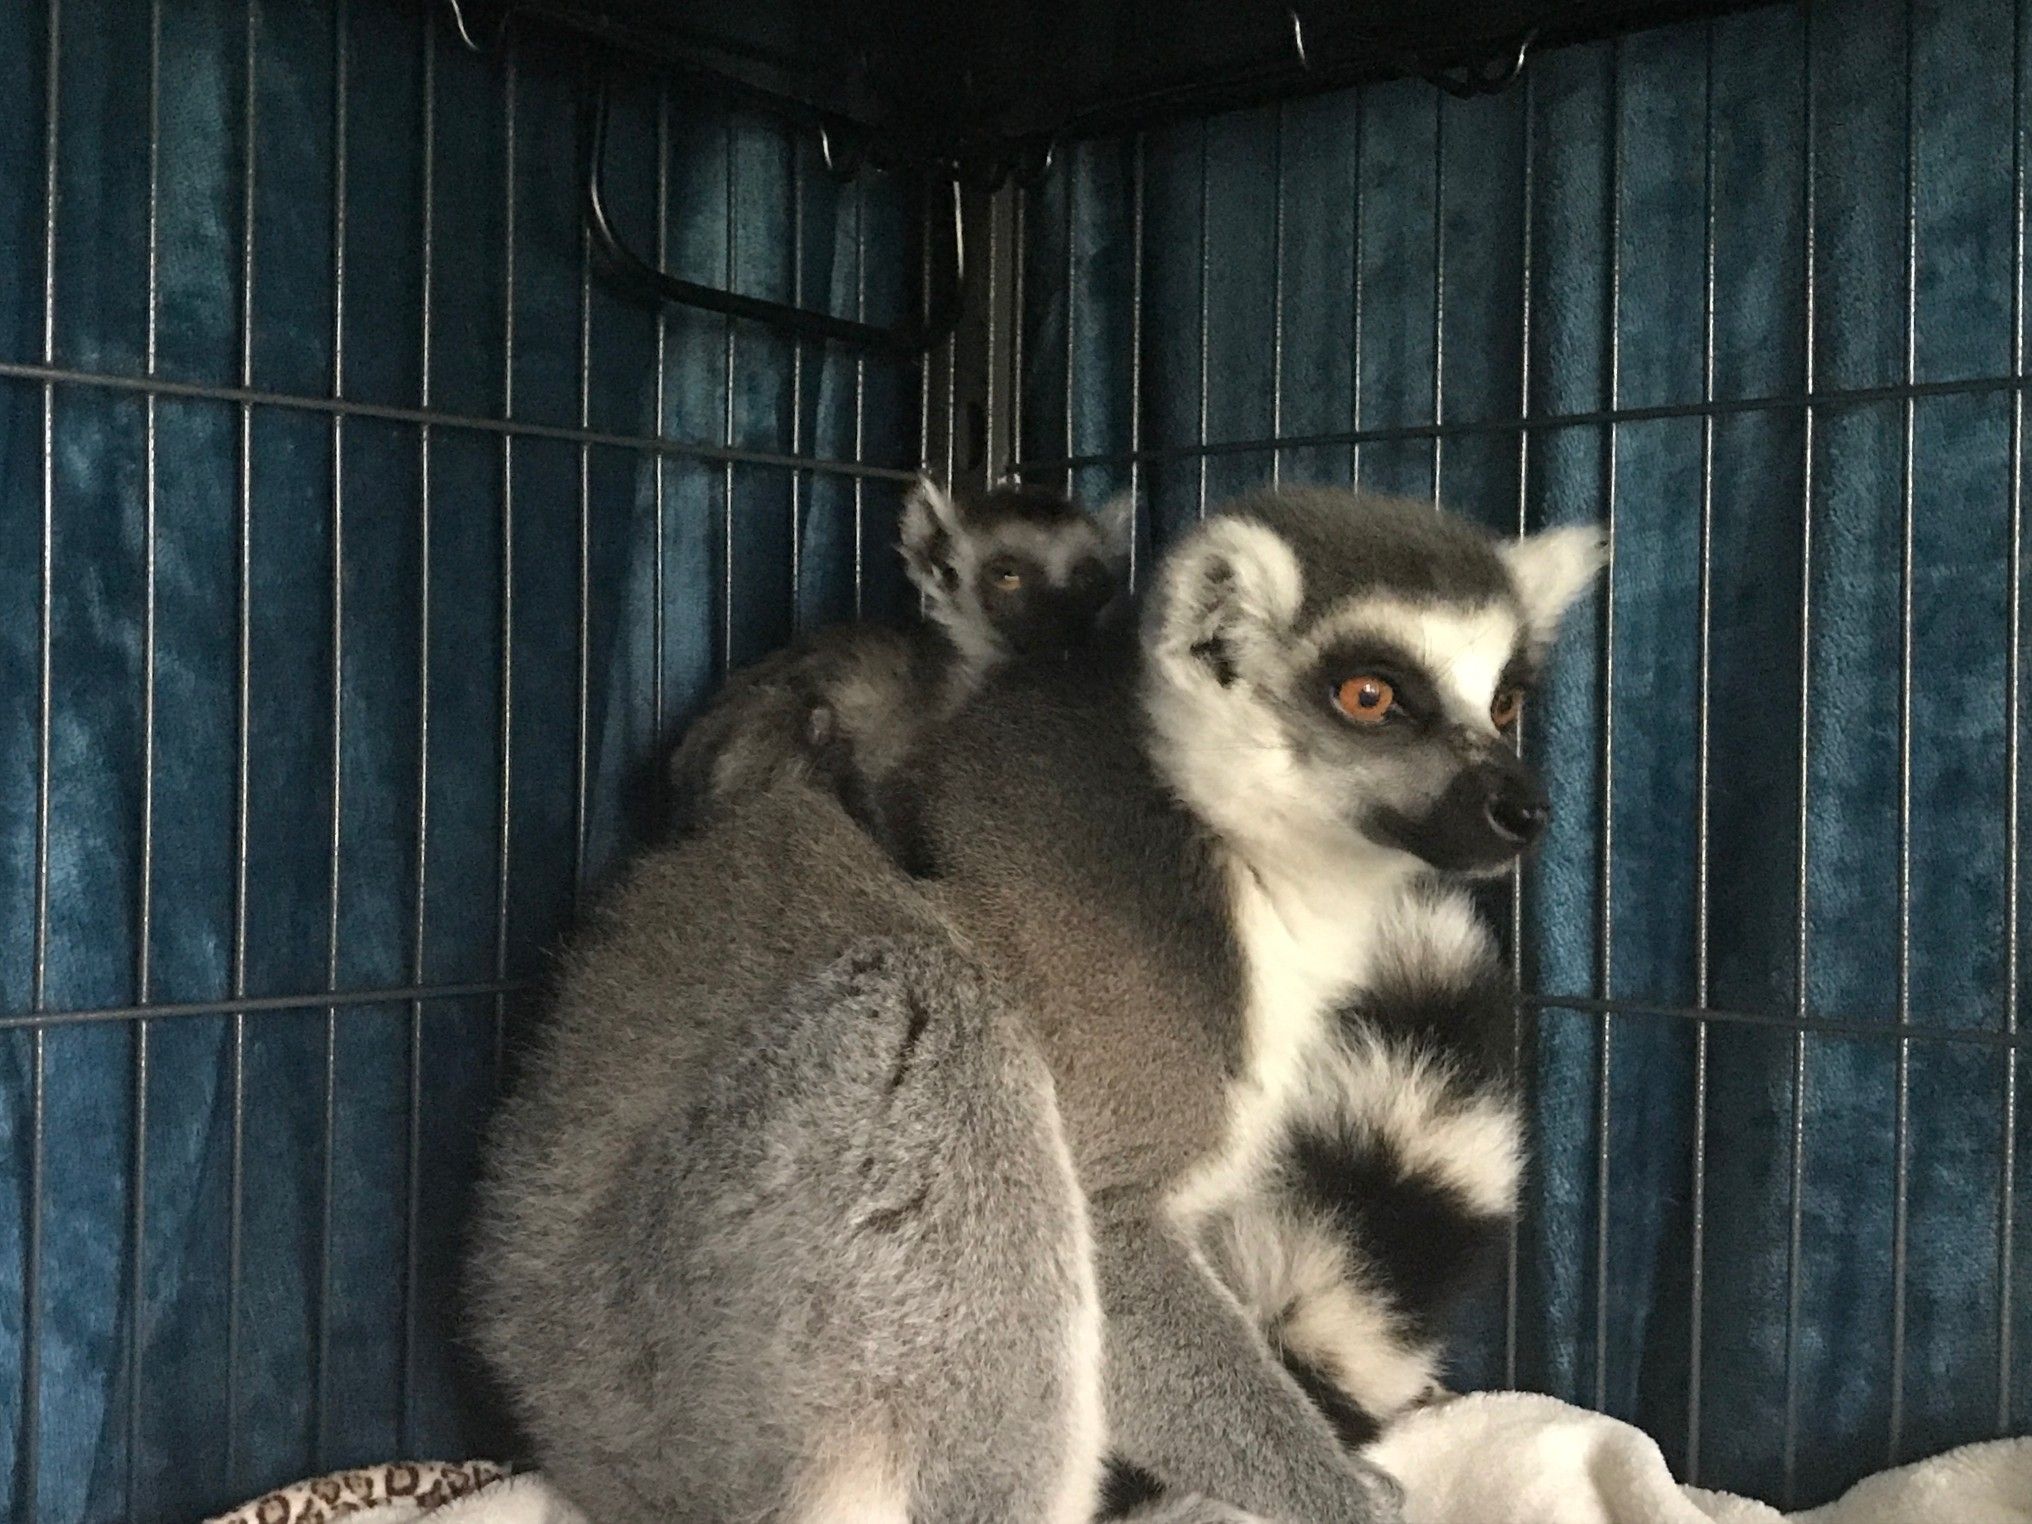 Mom and baby lemur